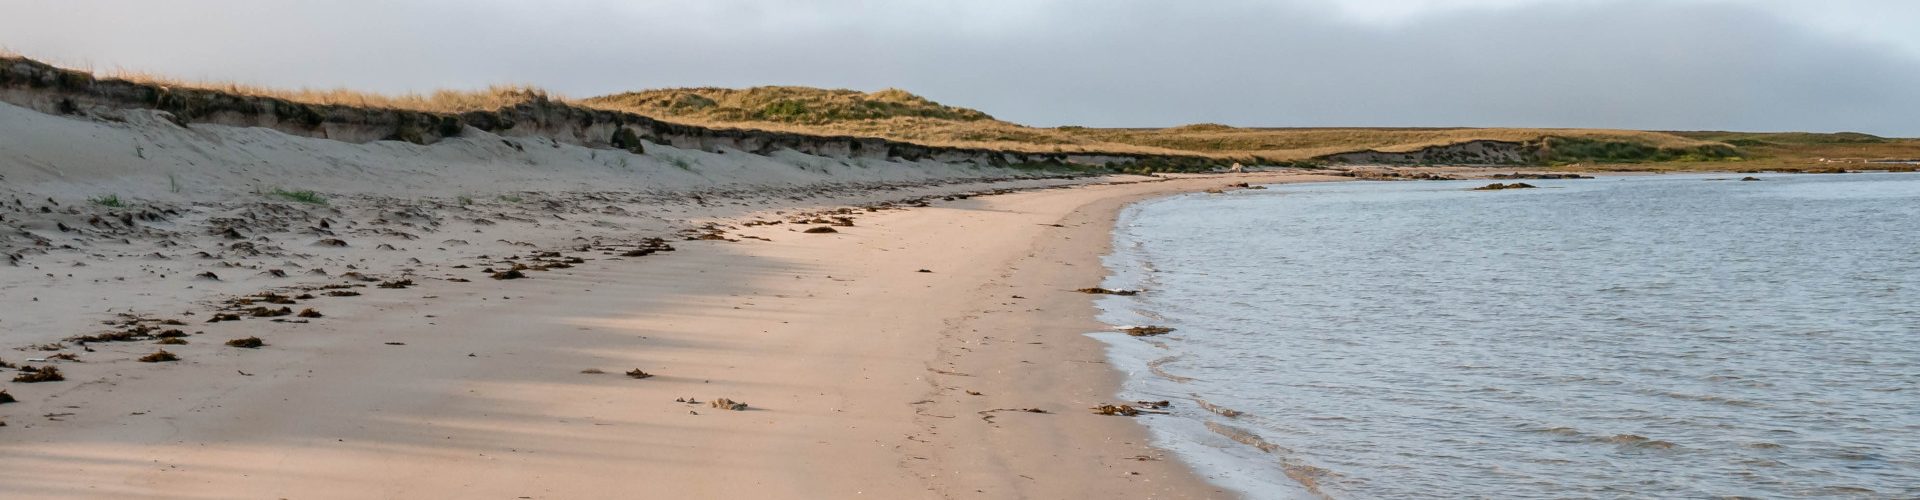 A peaceful beach on the Isle of Islay